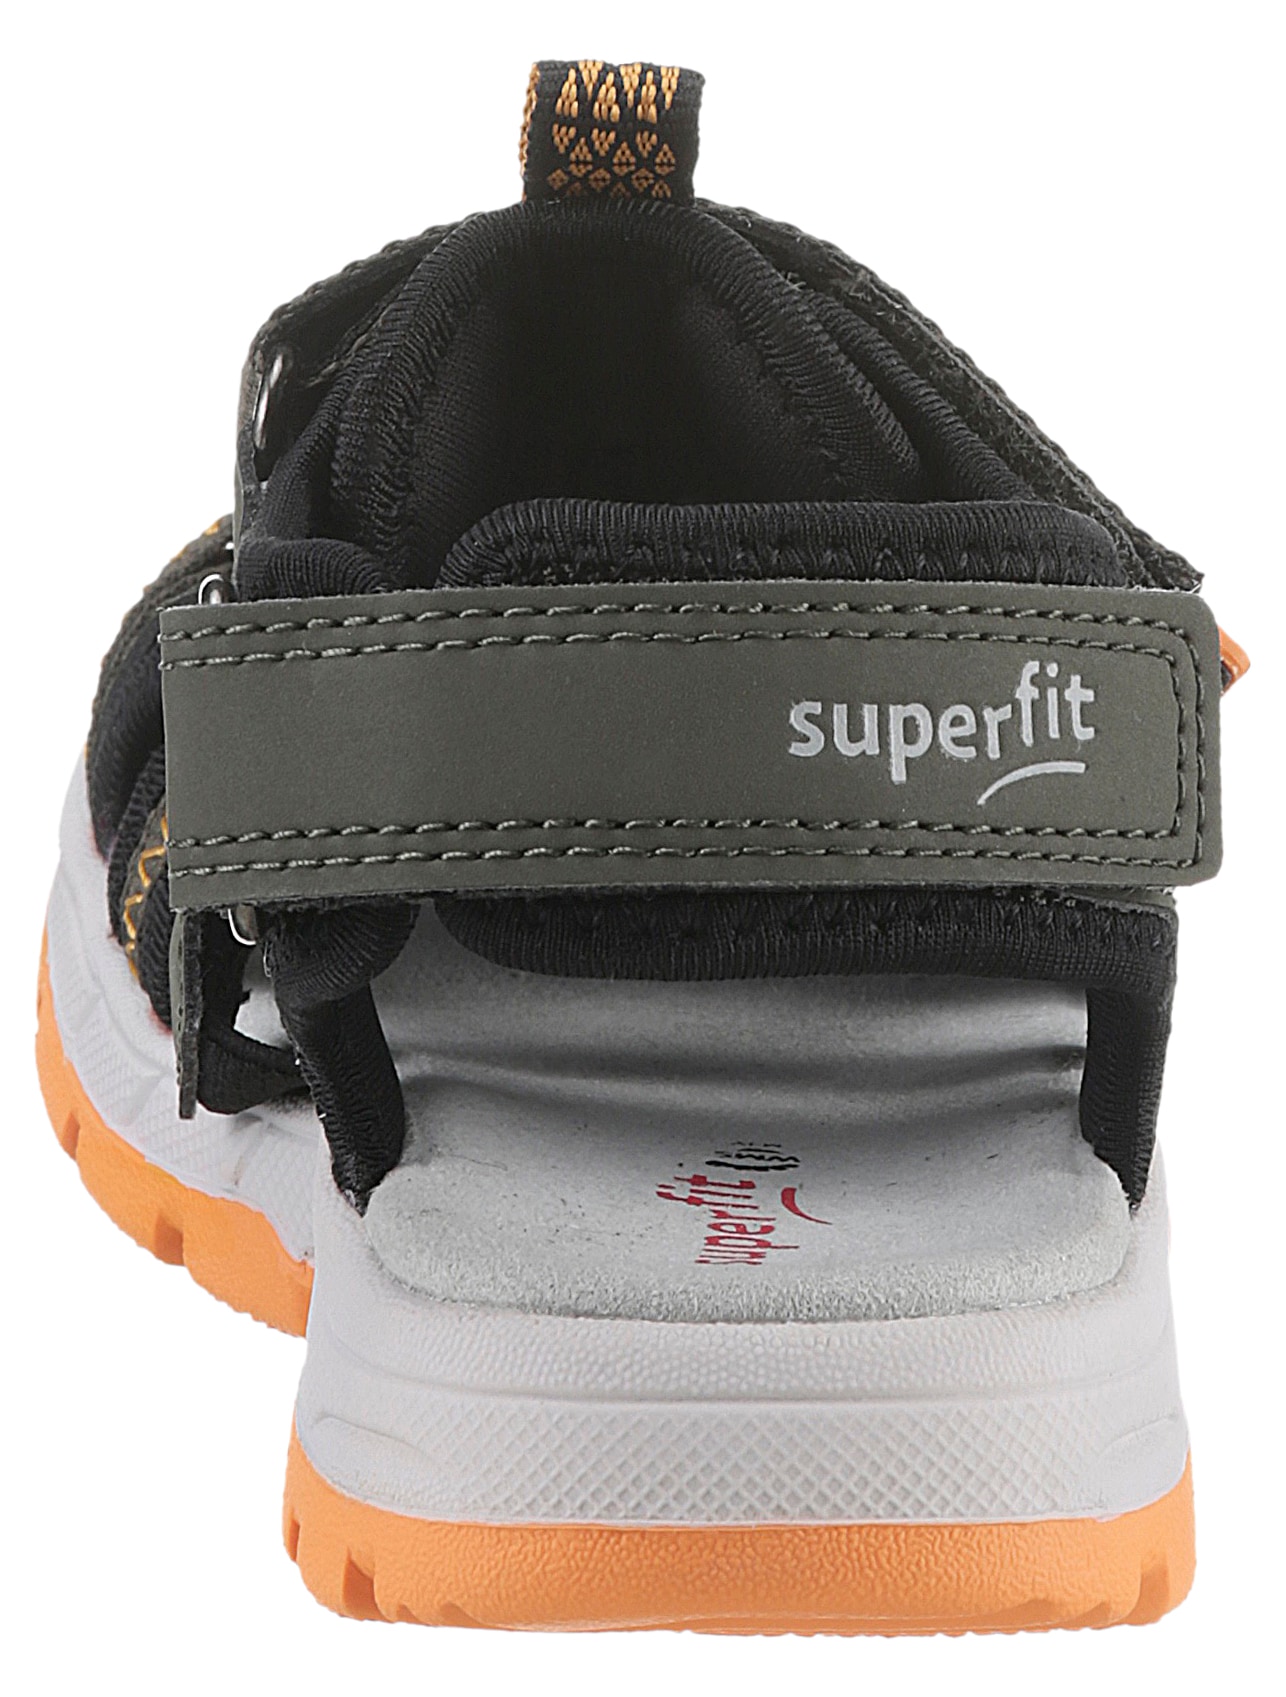 Superfit Sandale »TORNADO LIGHT WMS: Mittel«, Sommerschuh, Klettschuh, Sandalette, mit geschütztem Zehenbereich